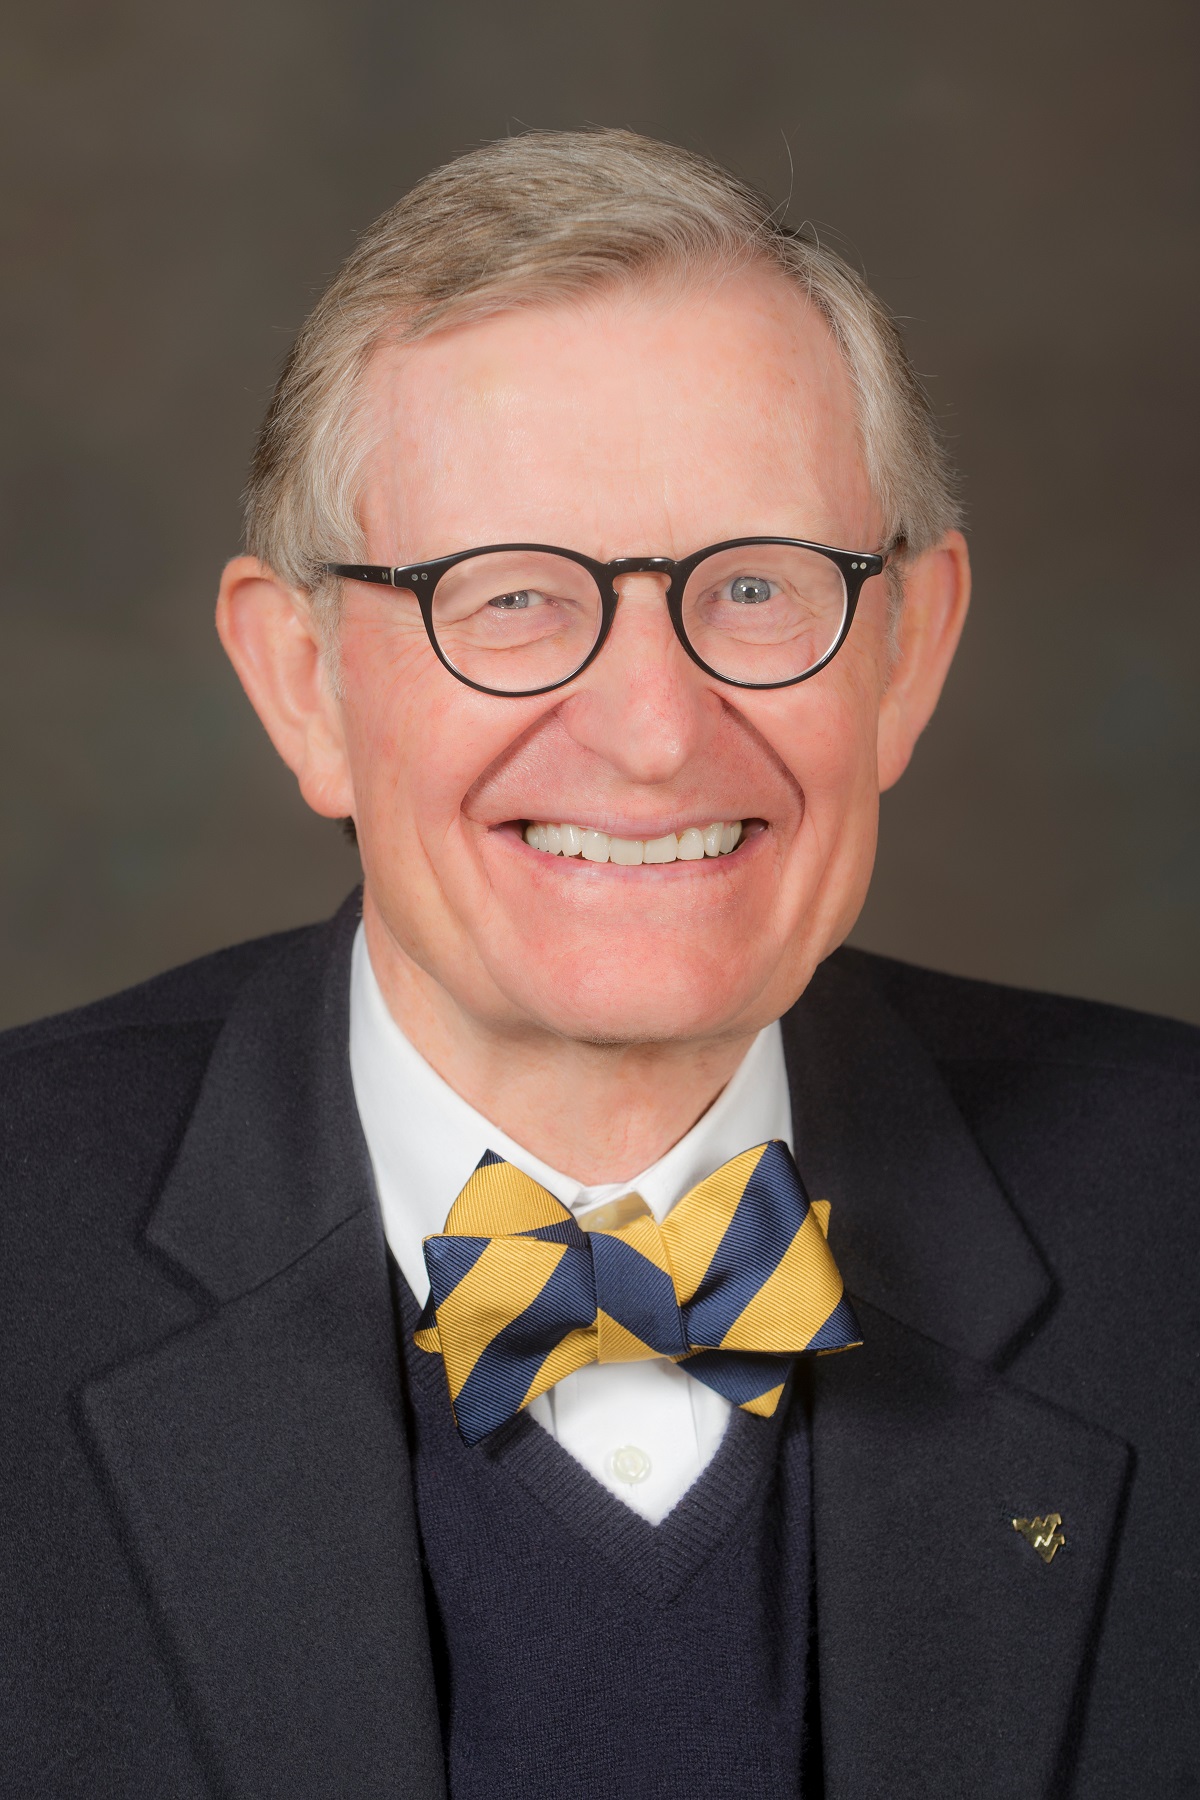 Gordon Gee, president of West Virginia University